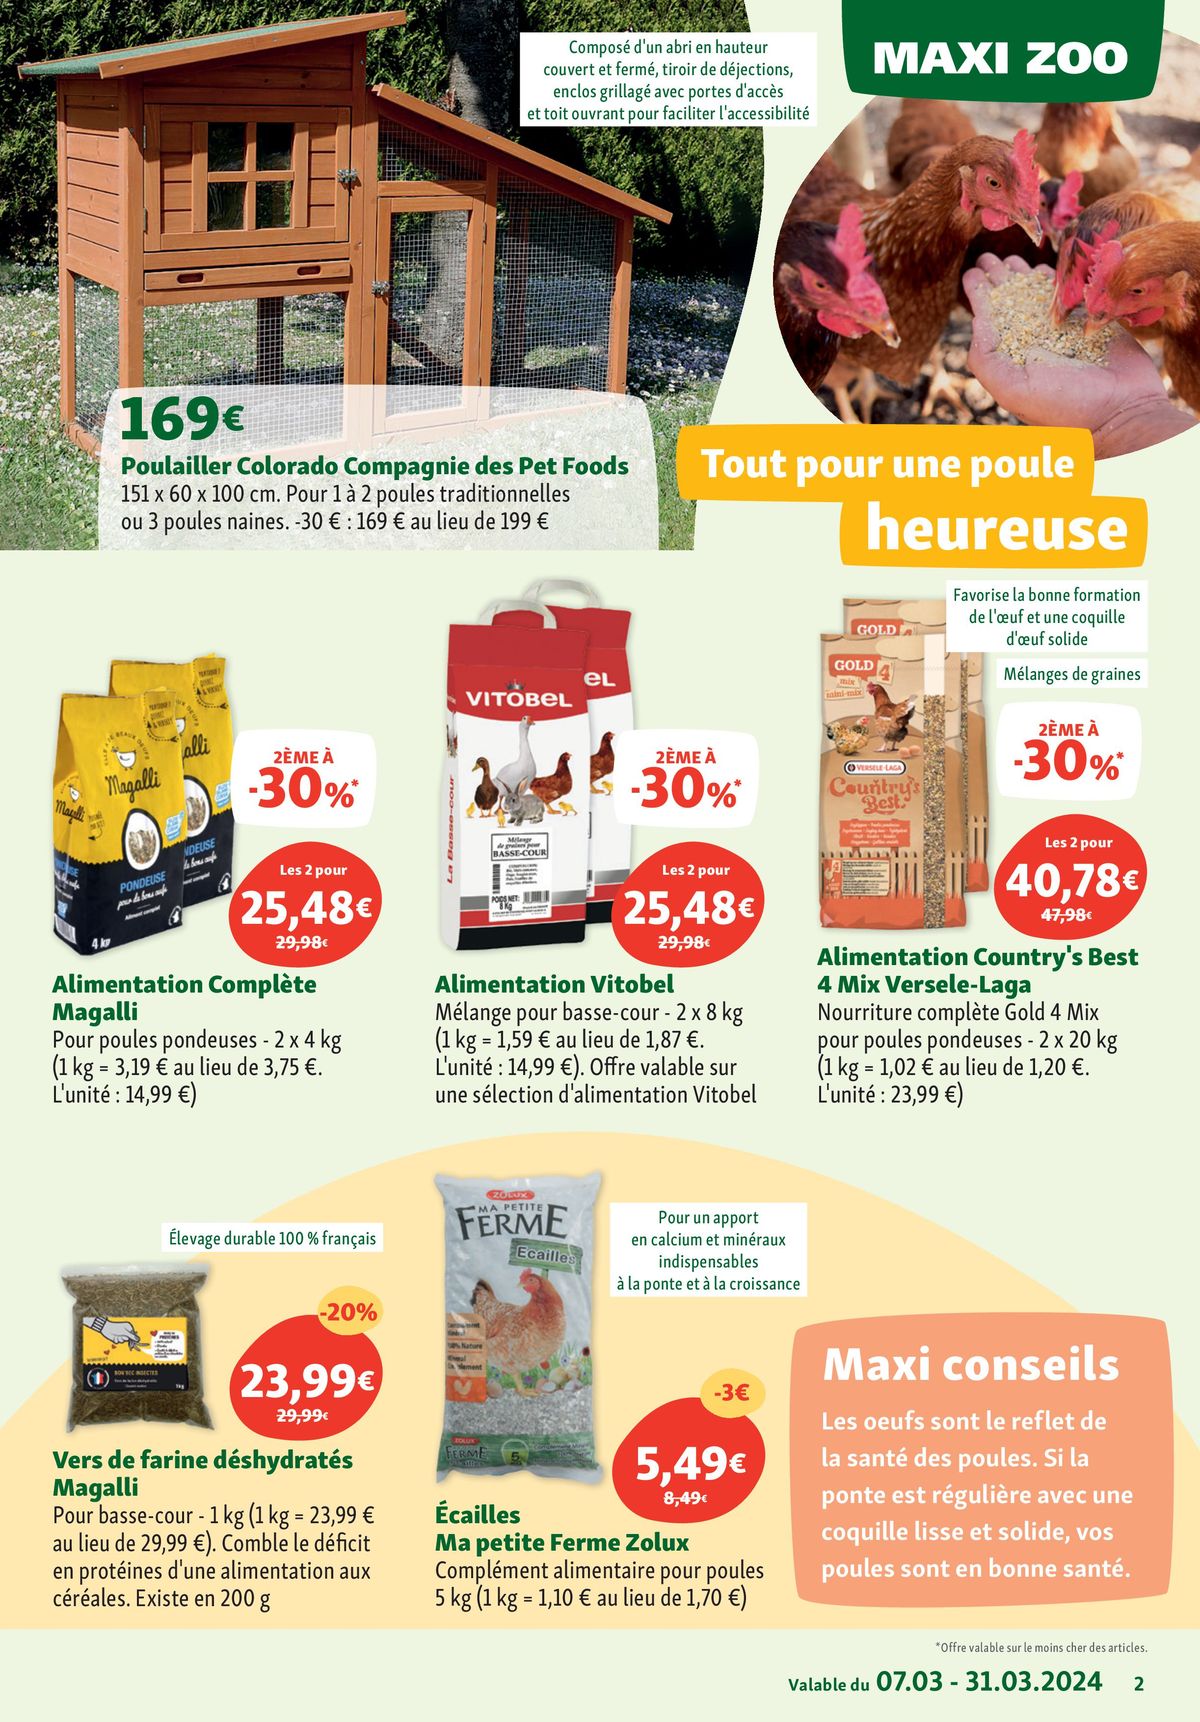 Catalogue Maxi Zoo : Les petits prix sont de sortie !, page 00002